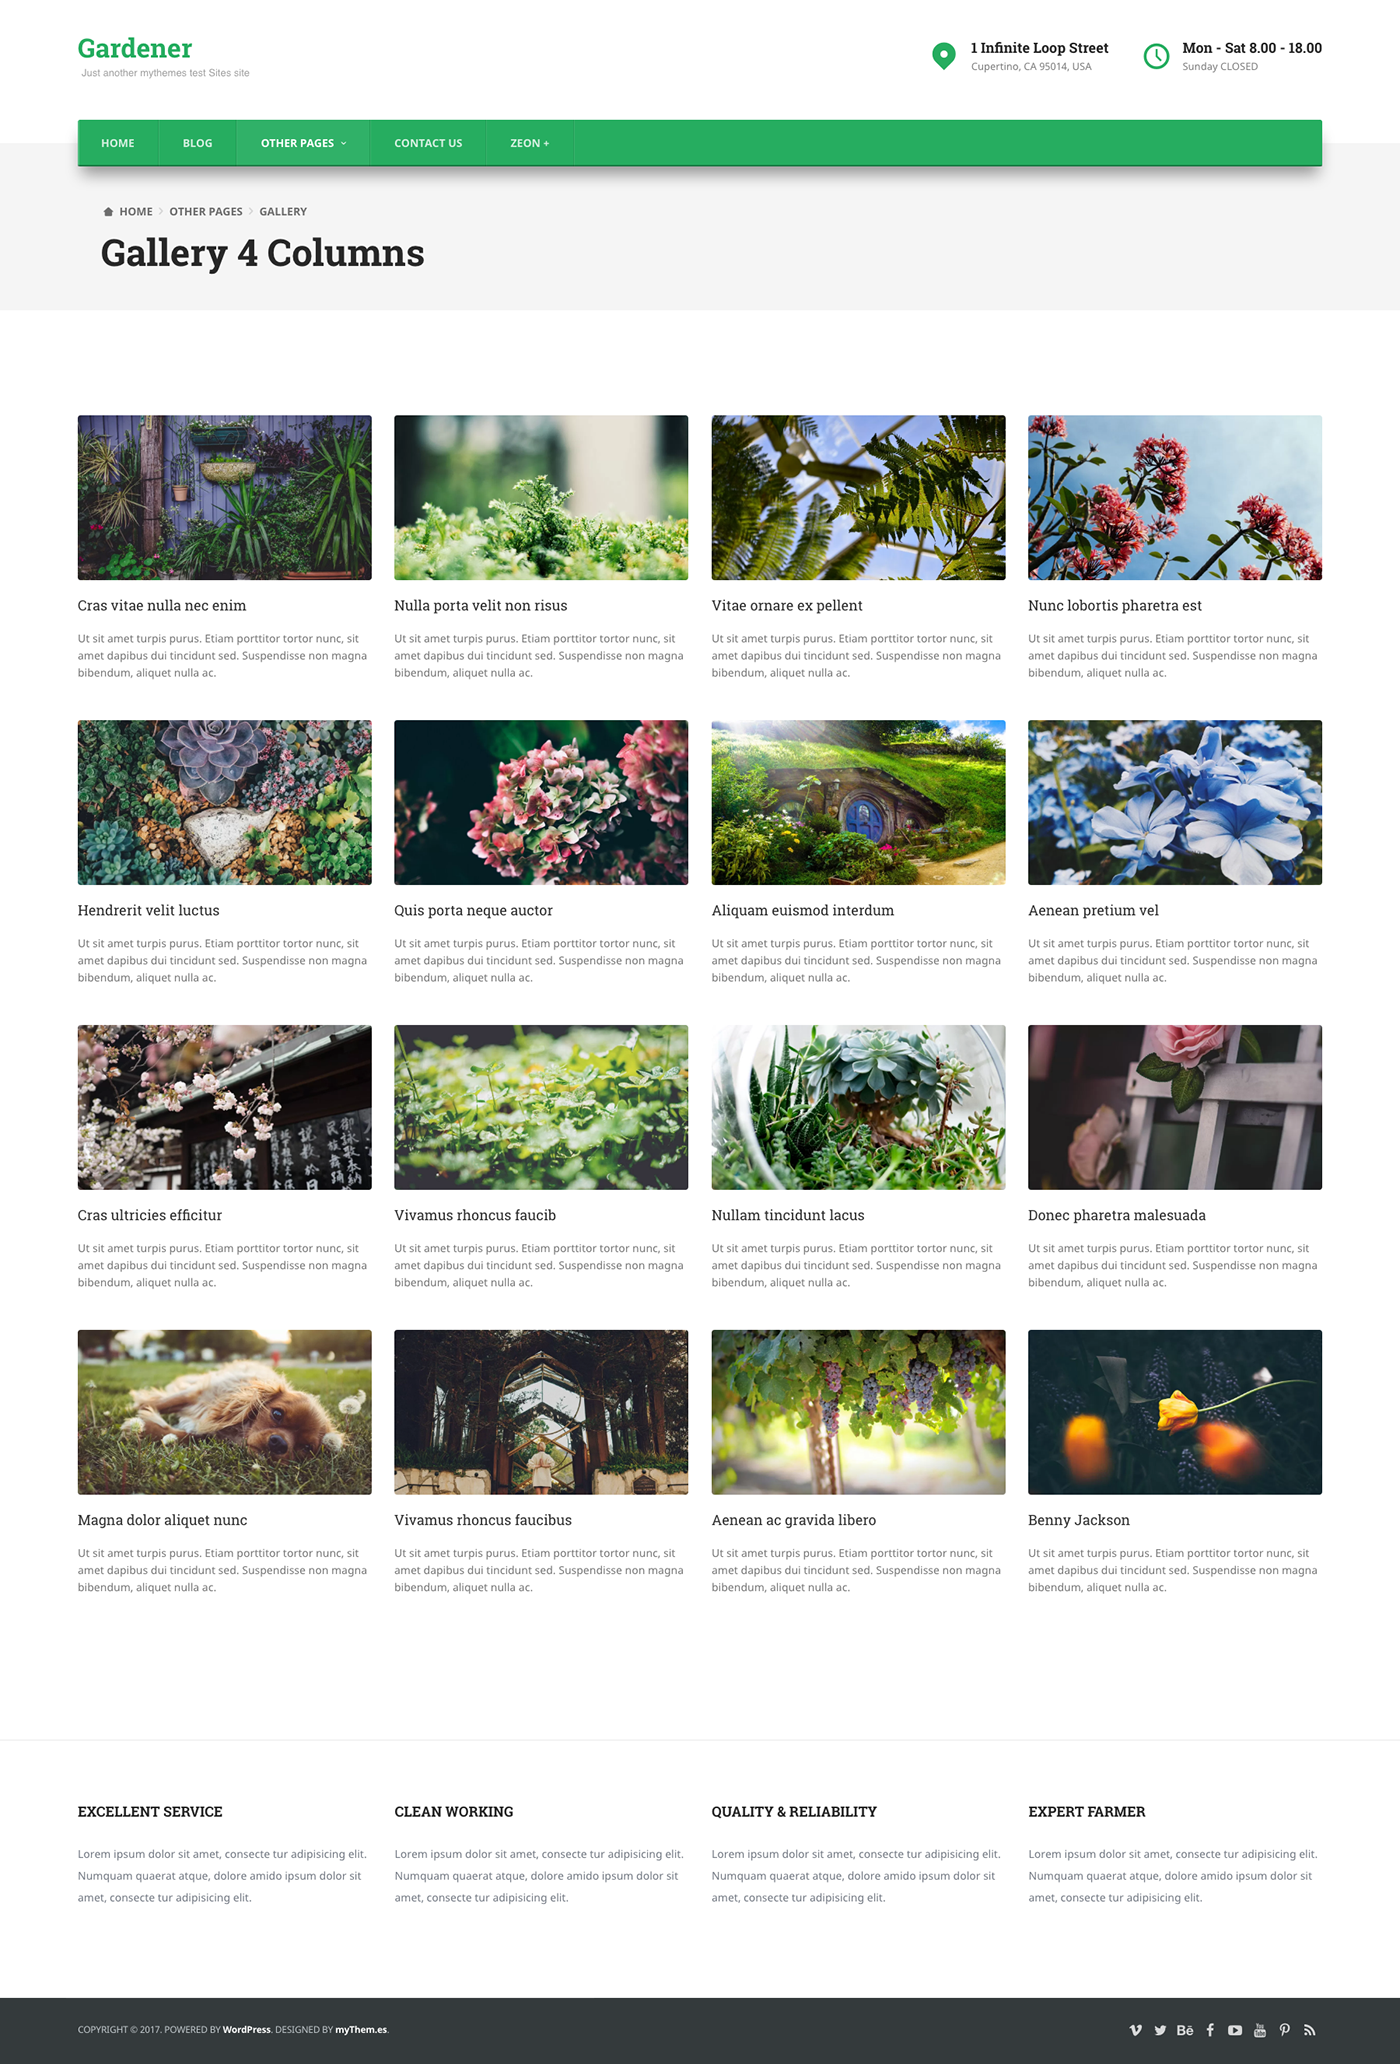 Small Business tempo child theme gardener wordpress template